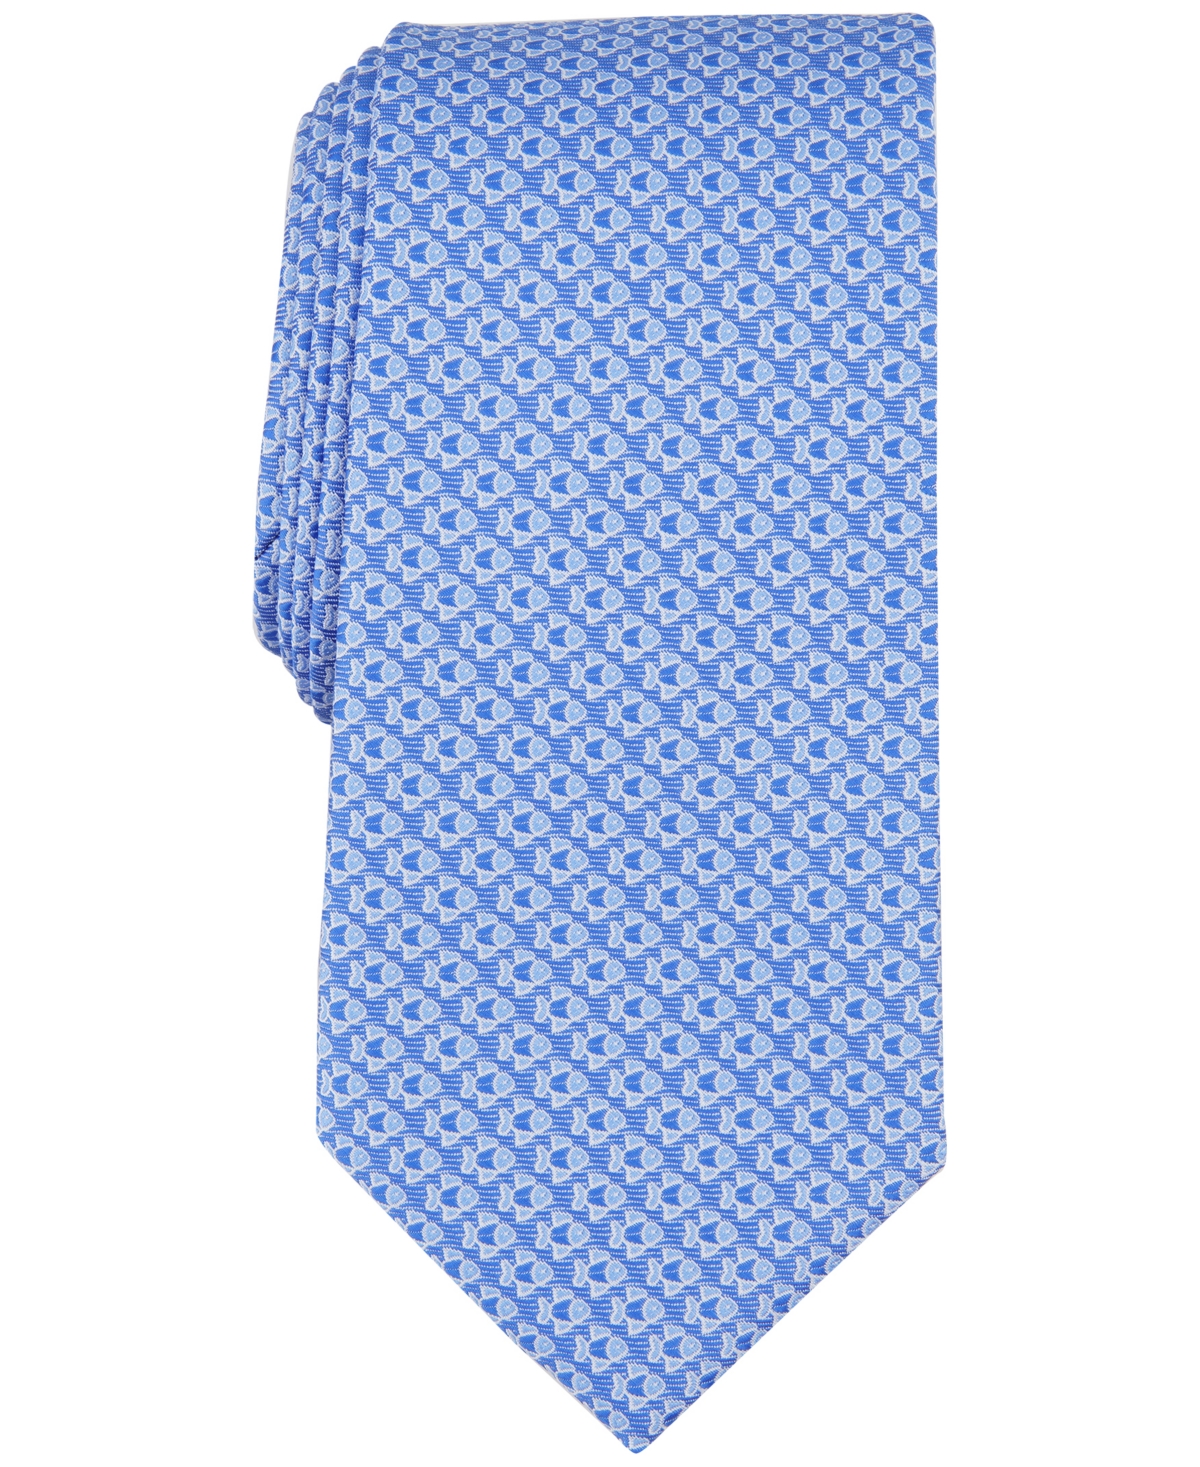 Men's Davie Fish Tie, Created for Macy's - Mint